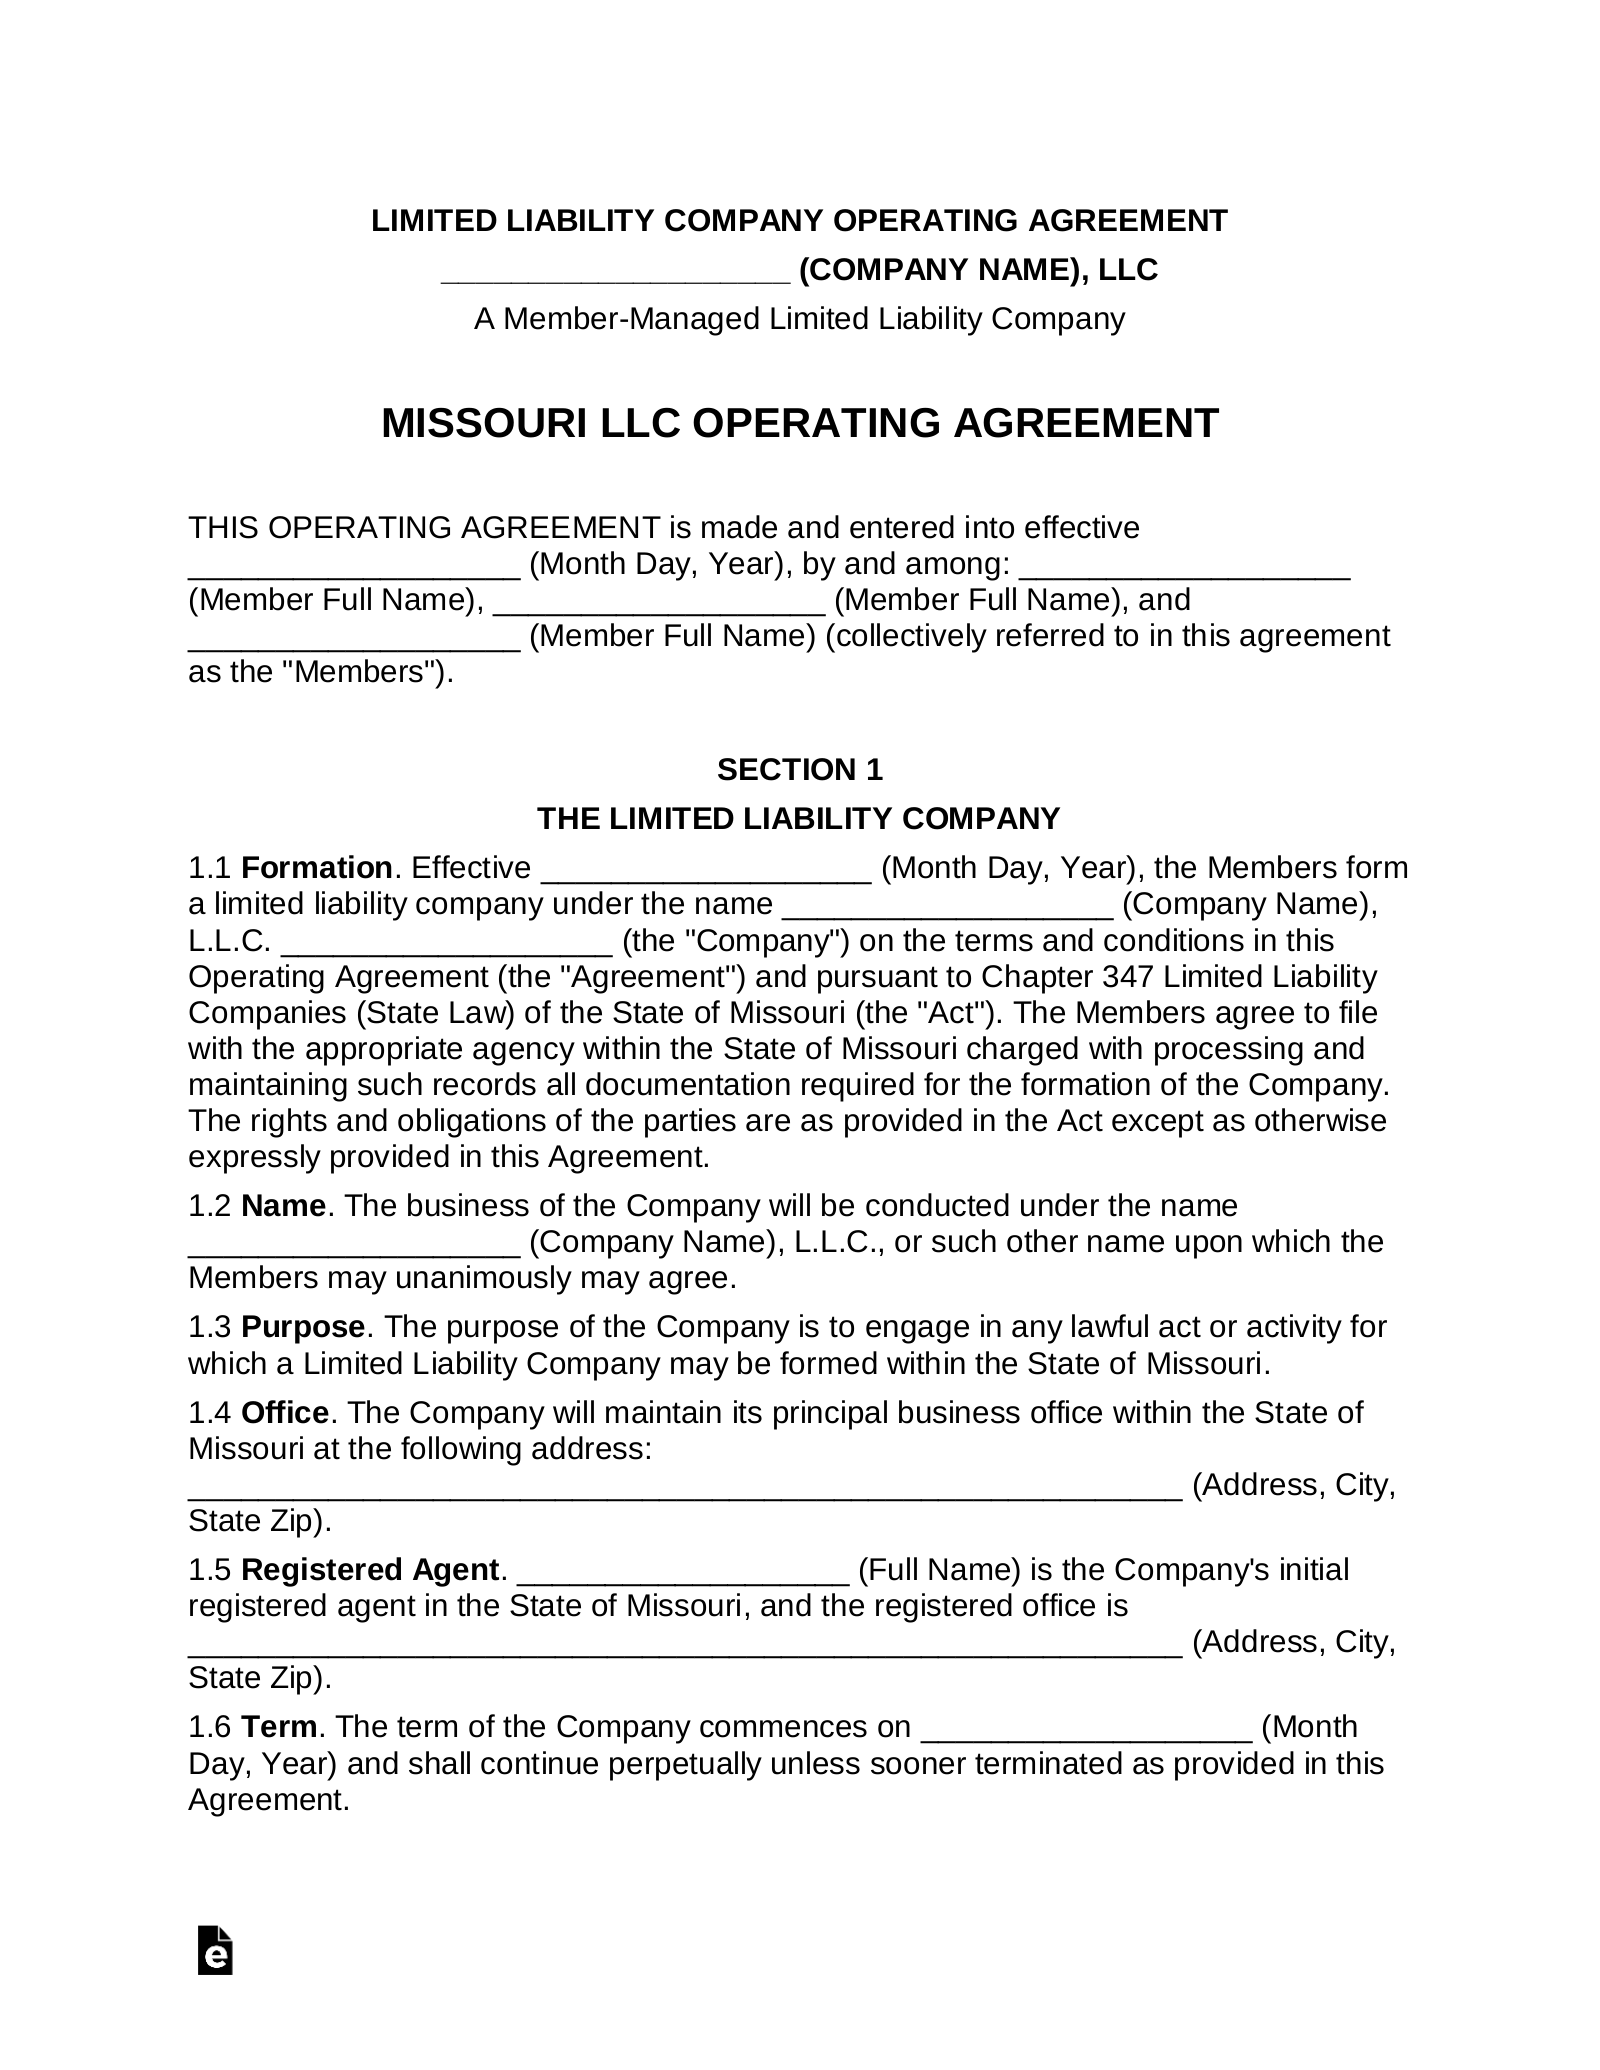 multi member llc operating agreement missouri